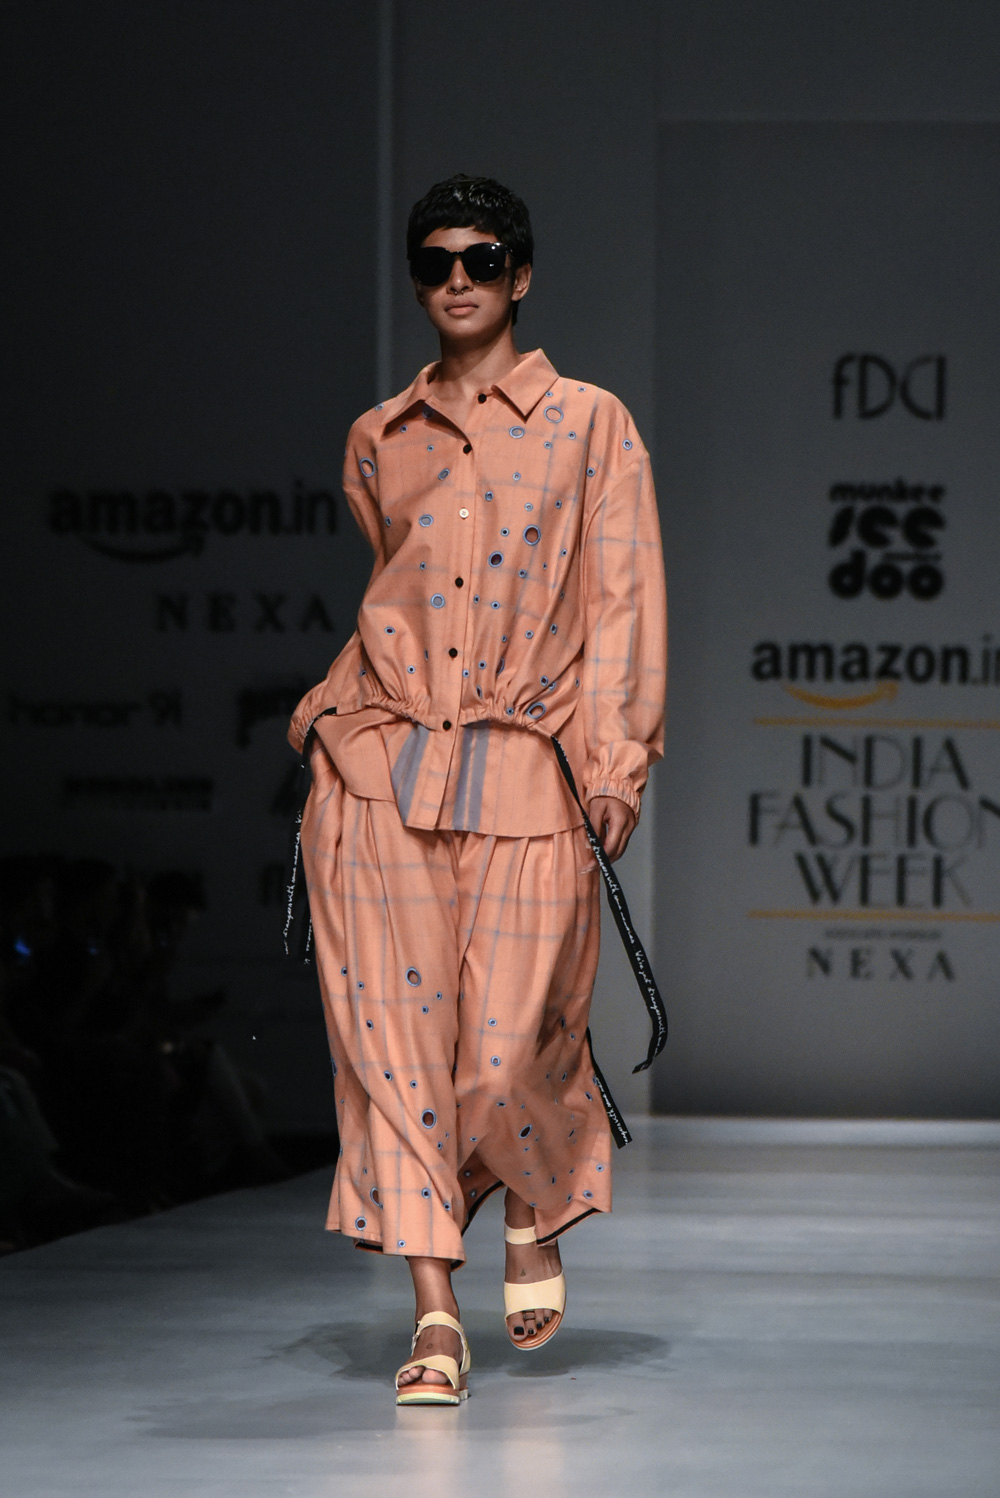 Munkee.See.Munkee.Doo FDCI Amazon India Fashion Week Spring Summer 2018 Look 5